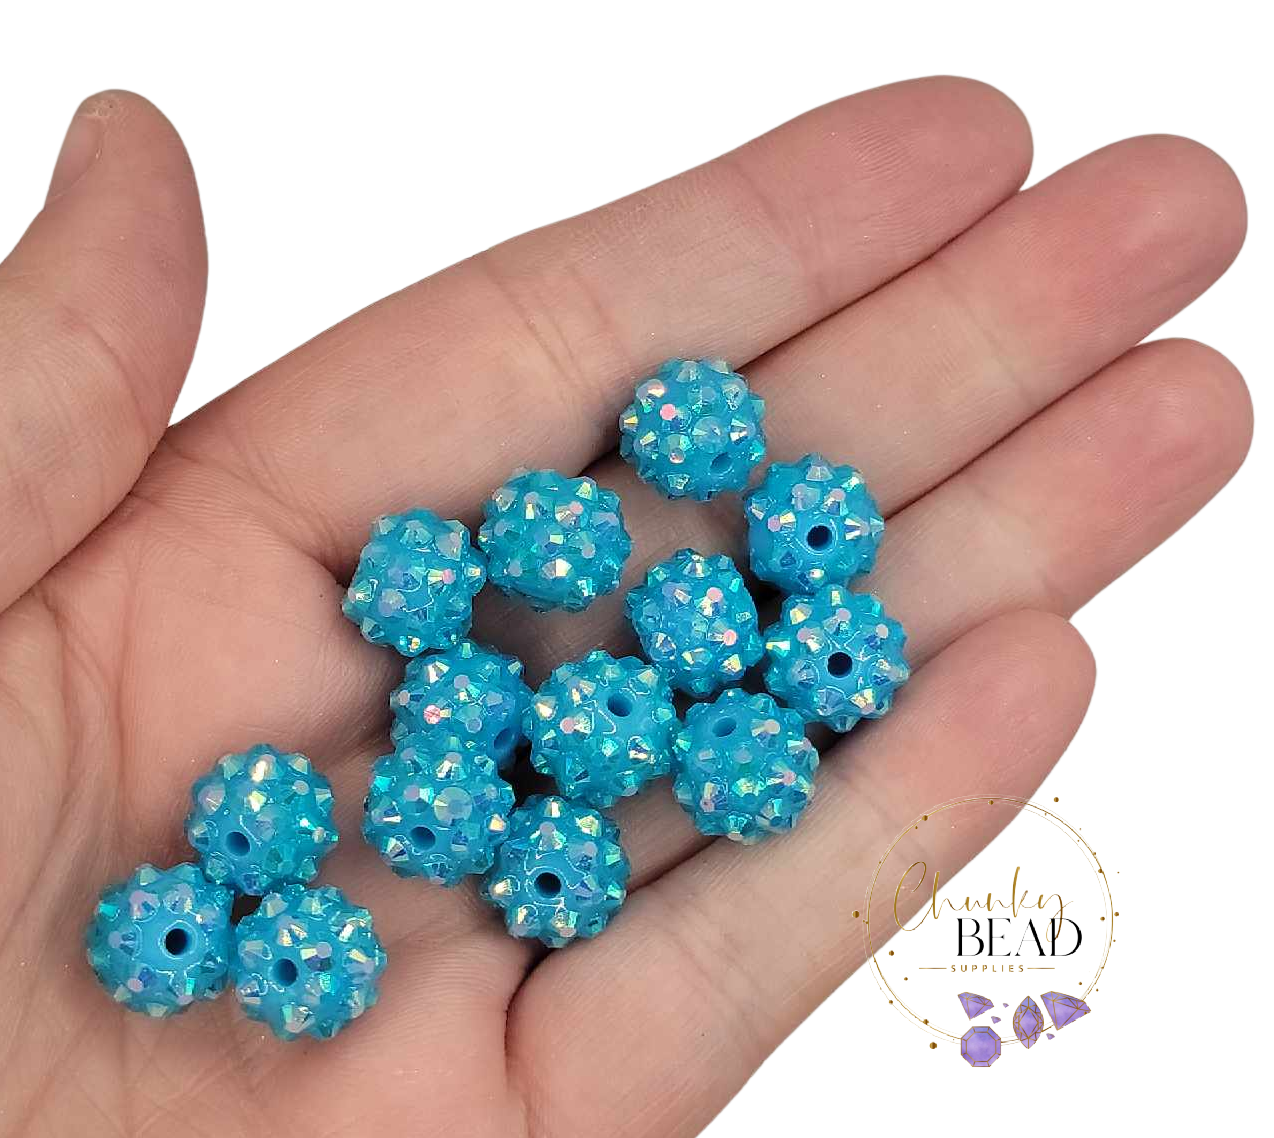 12mm "Aqua Blue" Rhinestone Acrylic Beads